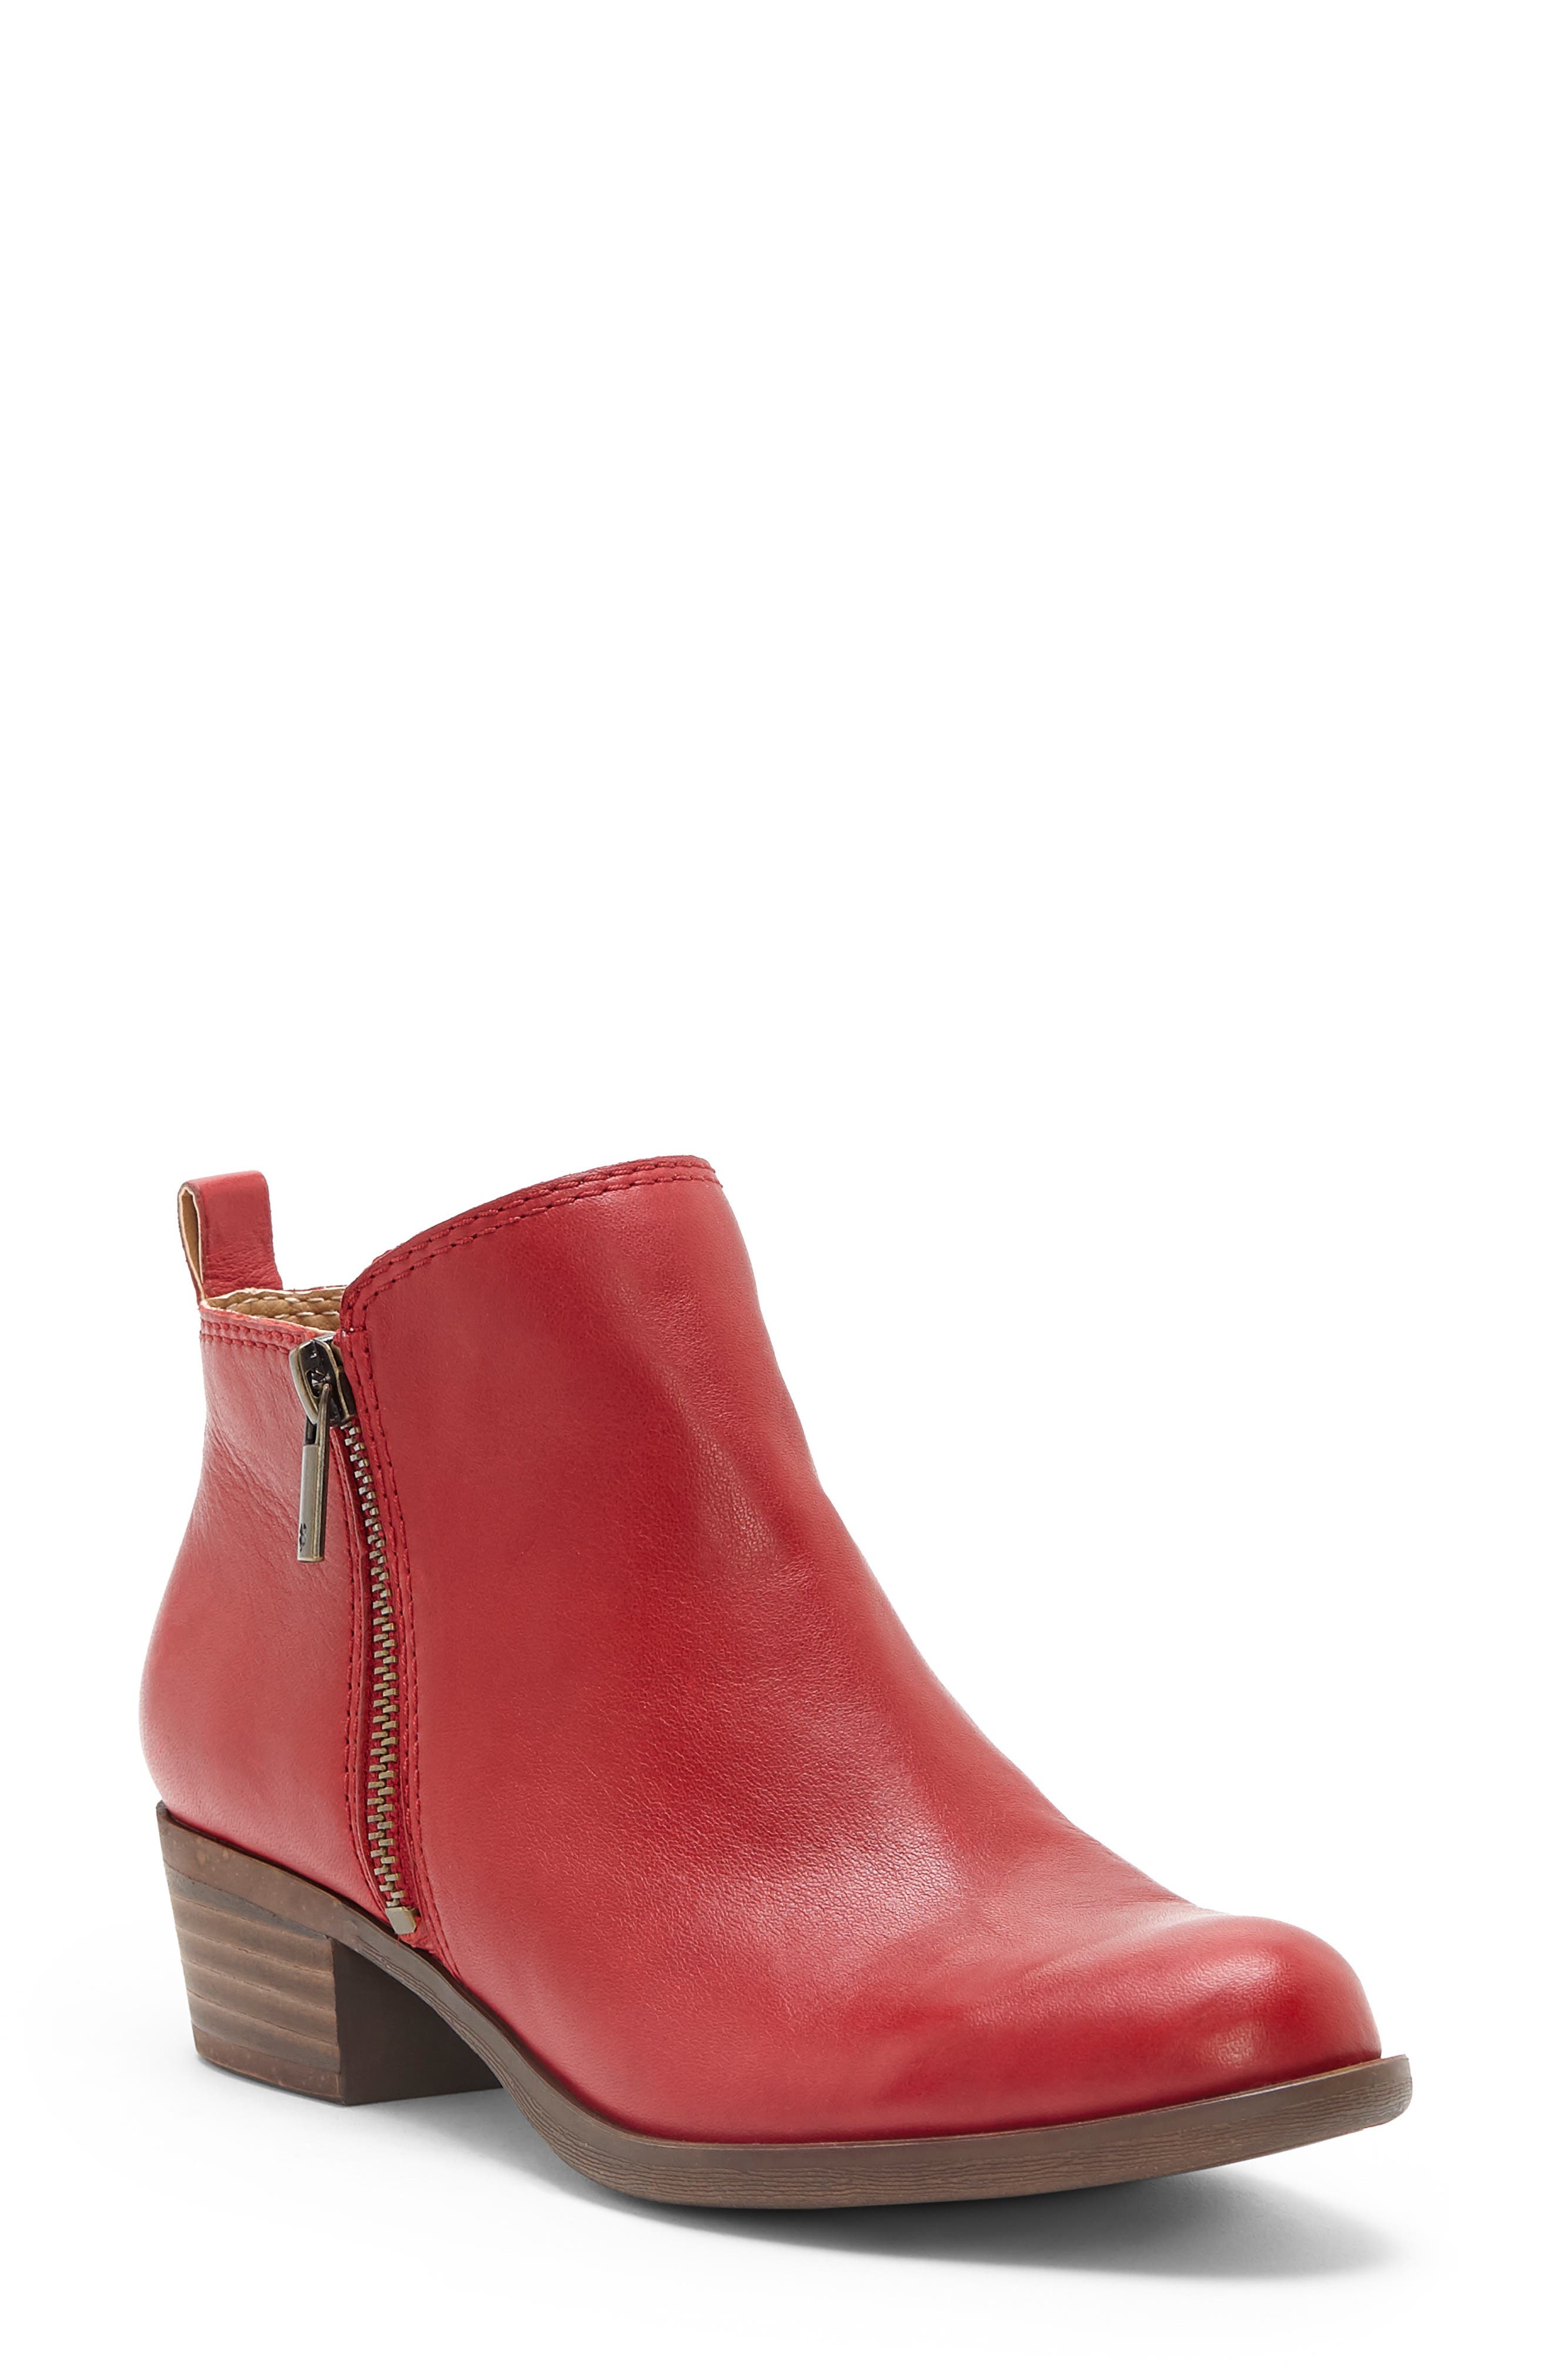 Ladies Elegant Burgundy Prune Red Ankle Boot Sizes UK 3 UK 8 